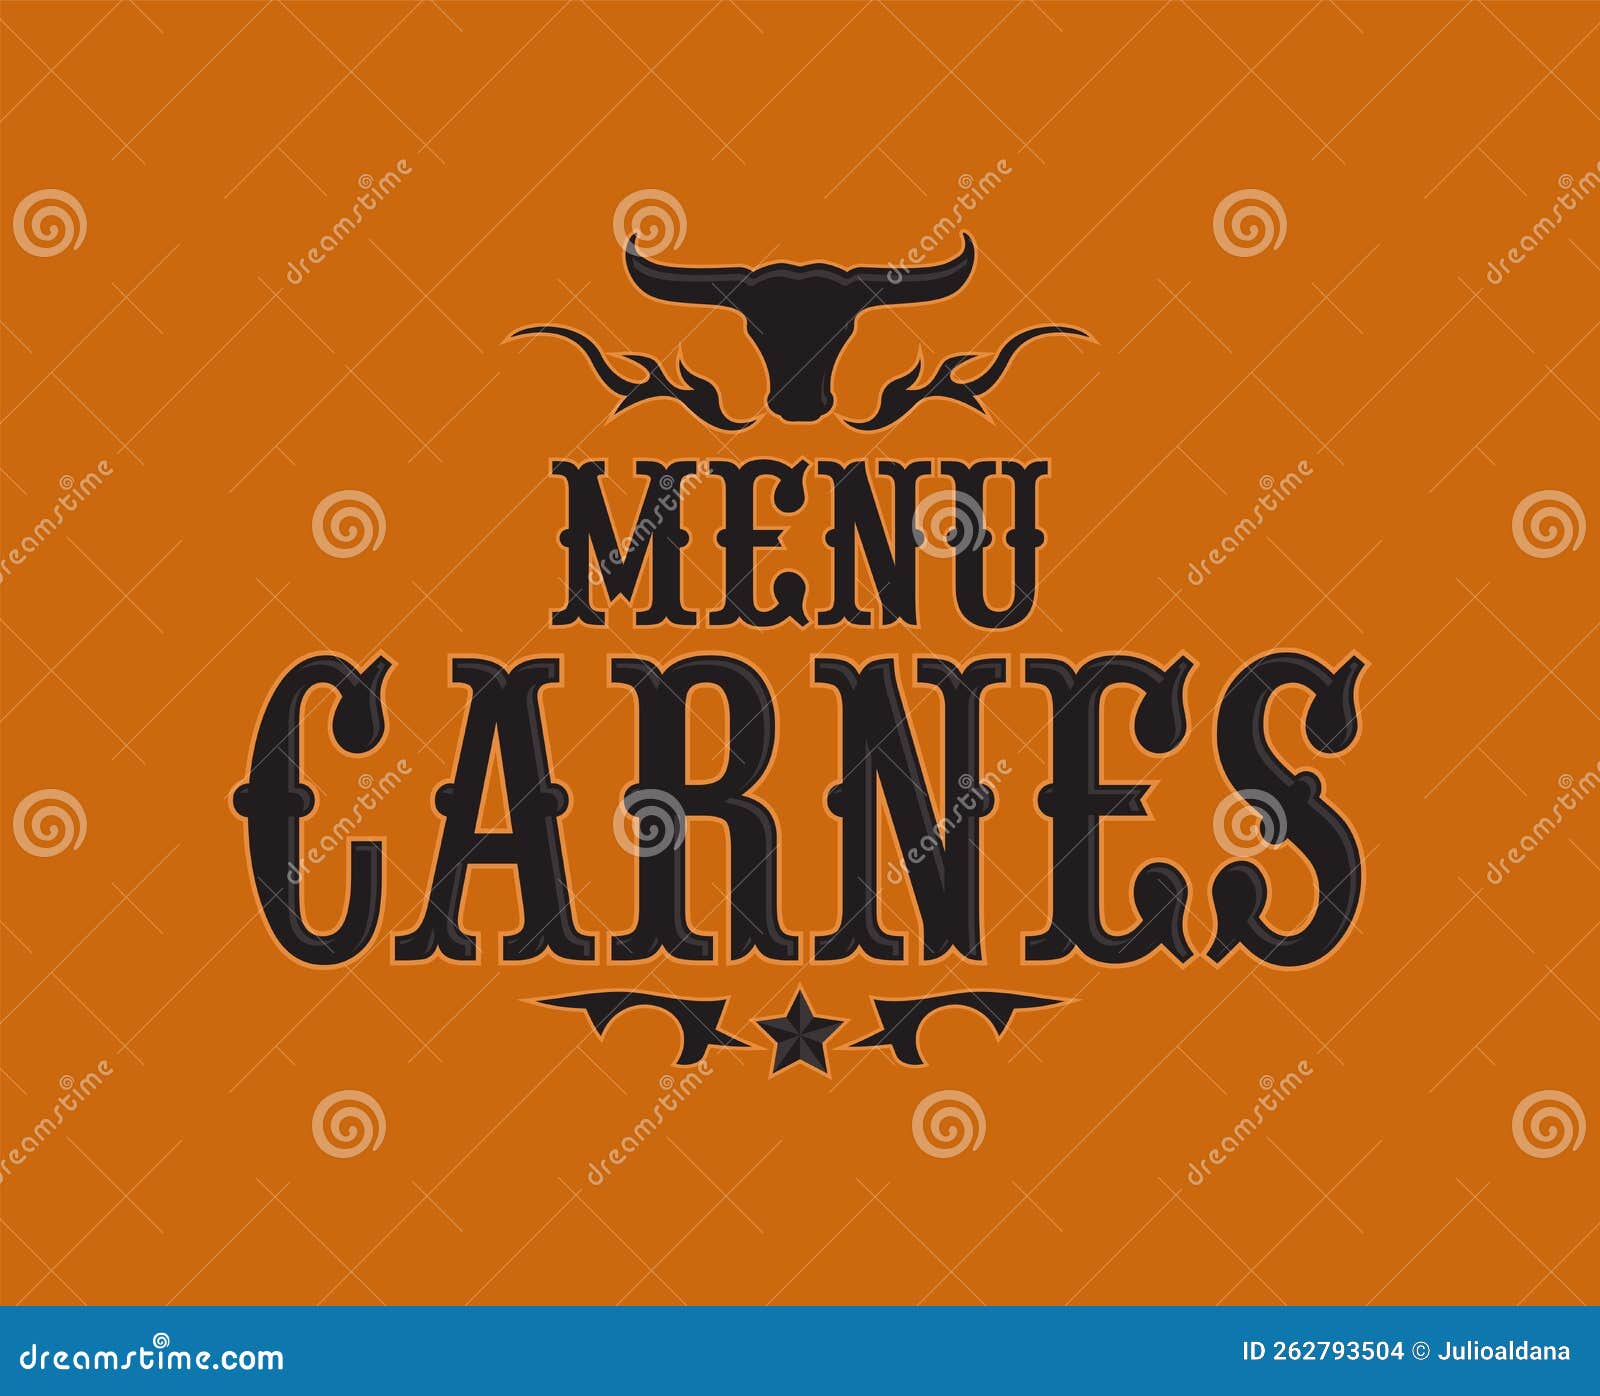 menu carnes, meat menu spanish text cover , barbecue restaurant.